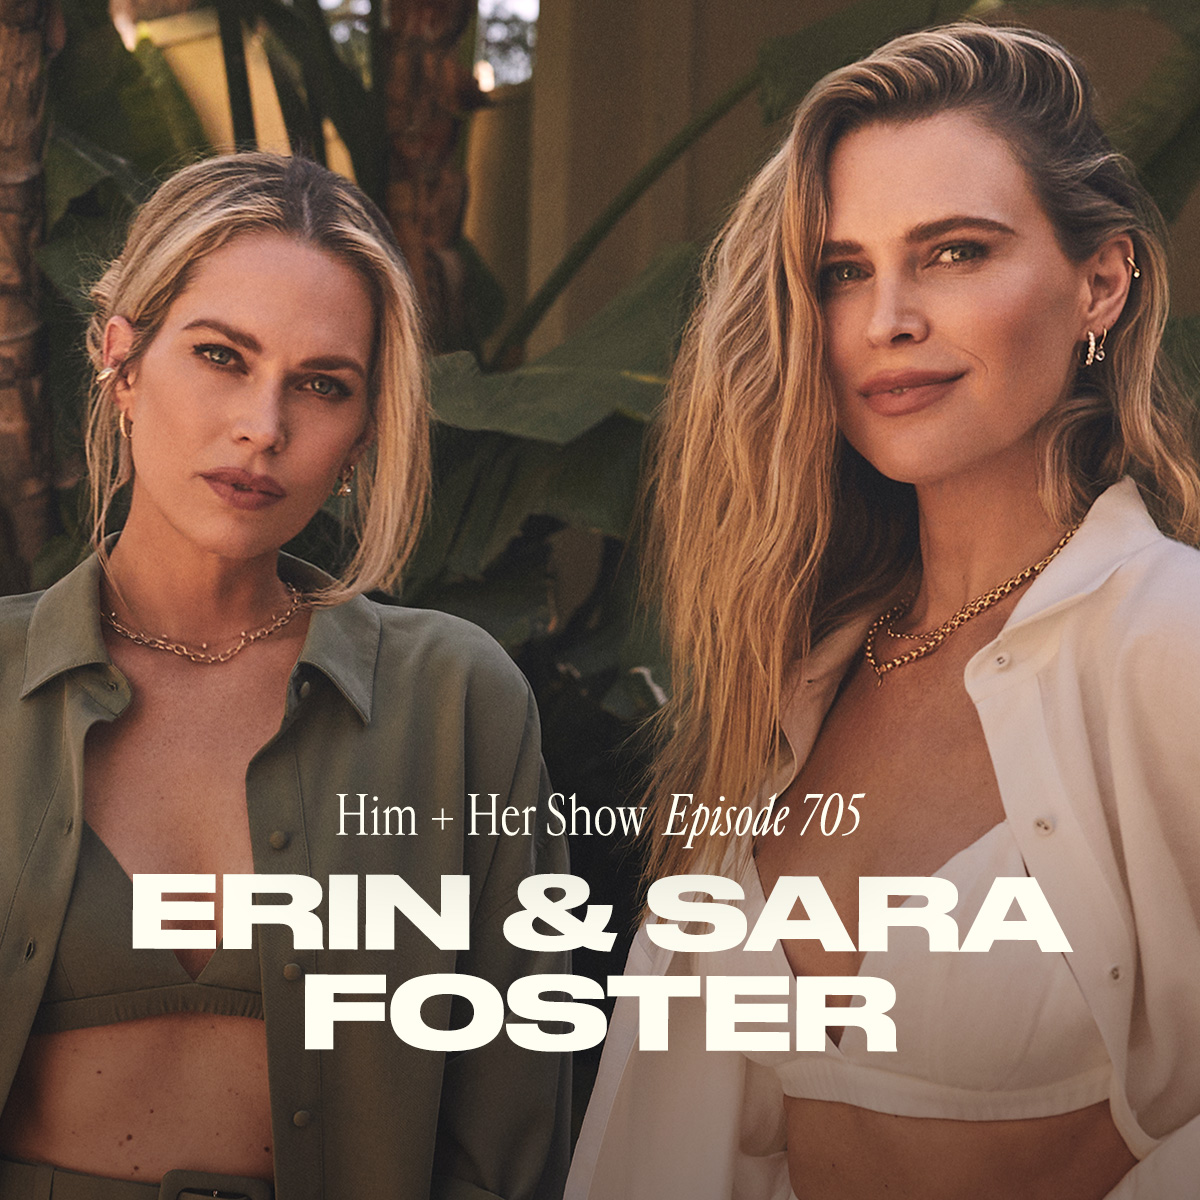 Erin & Sara Foster